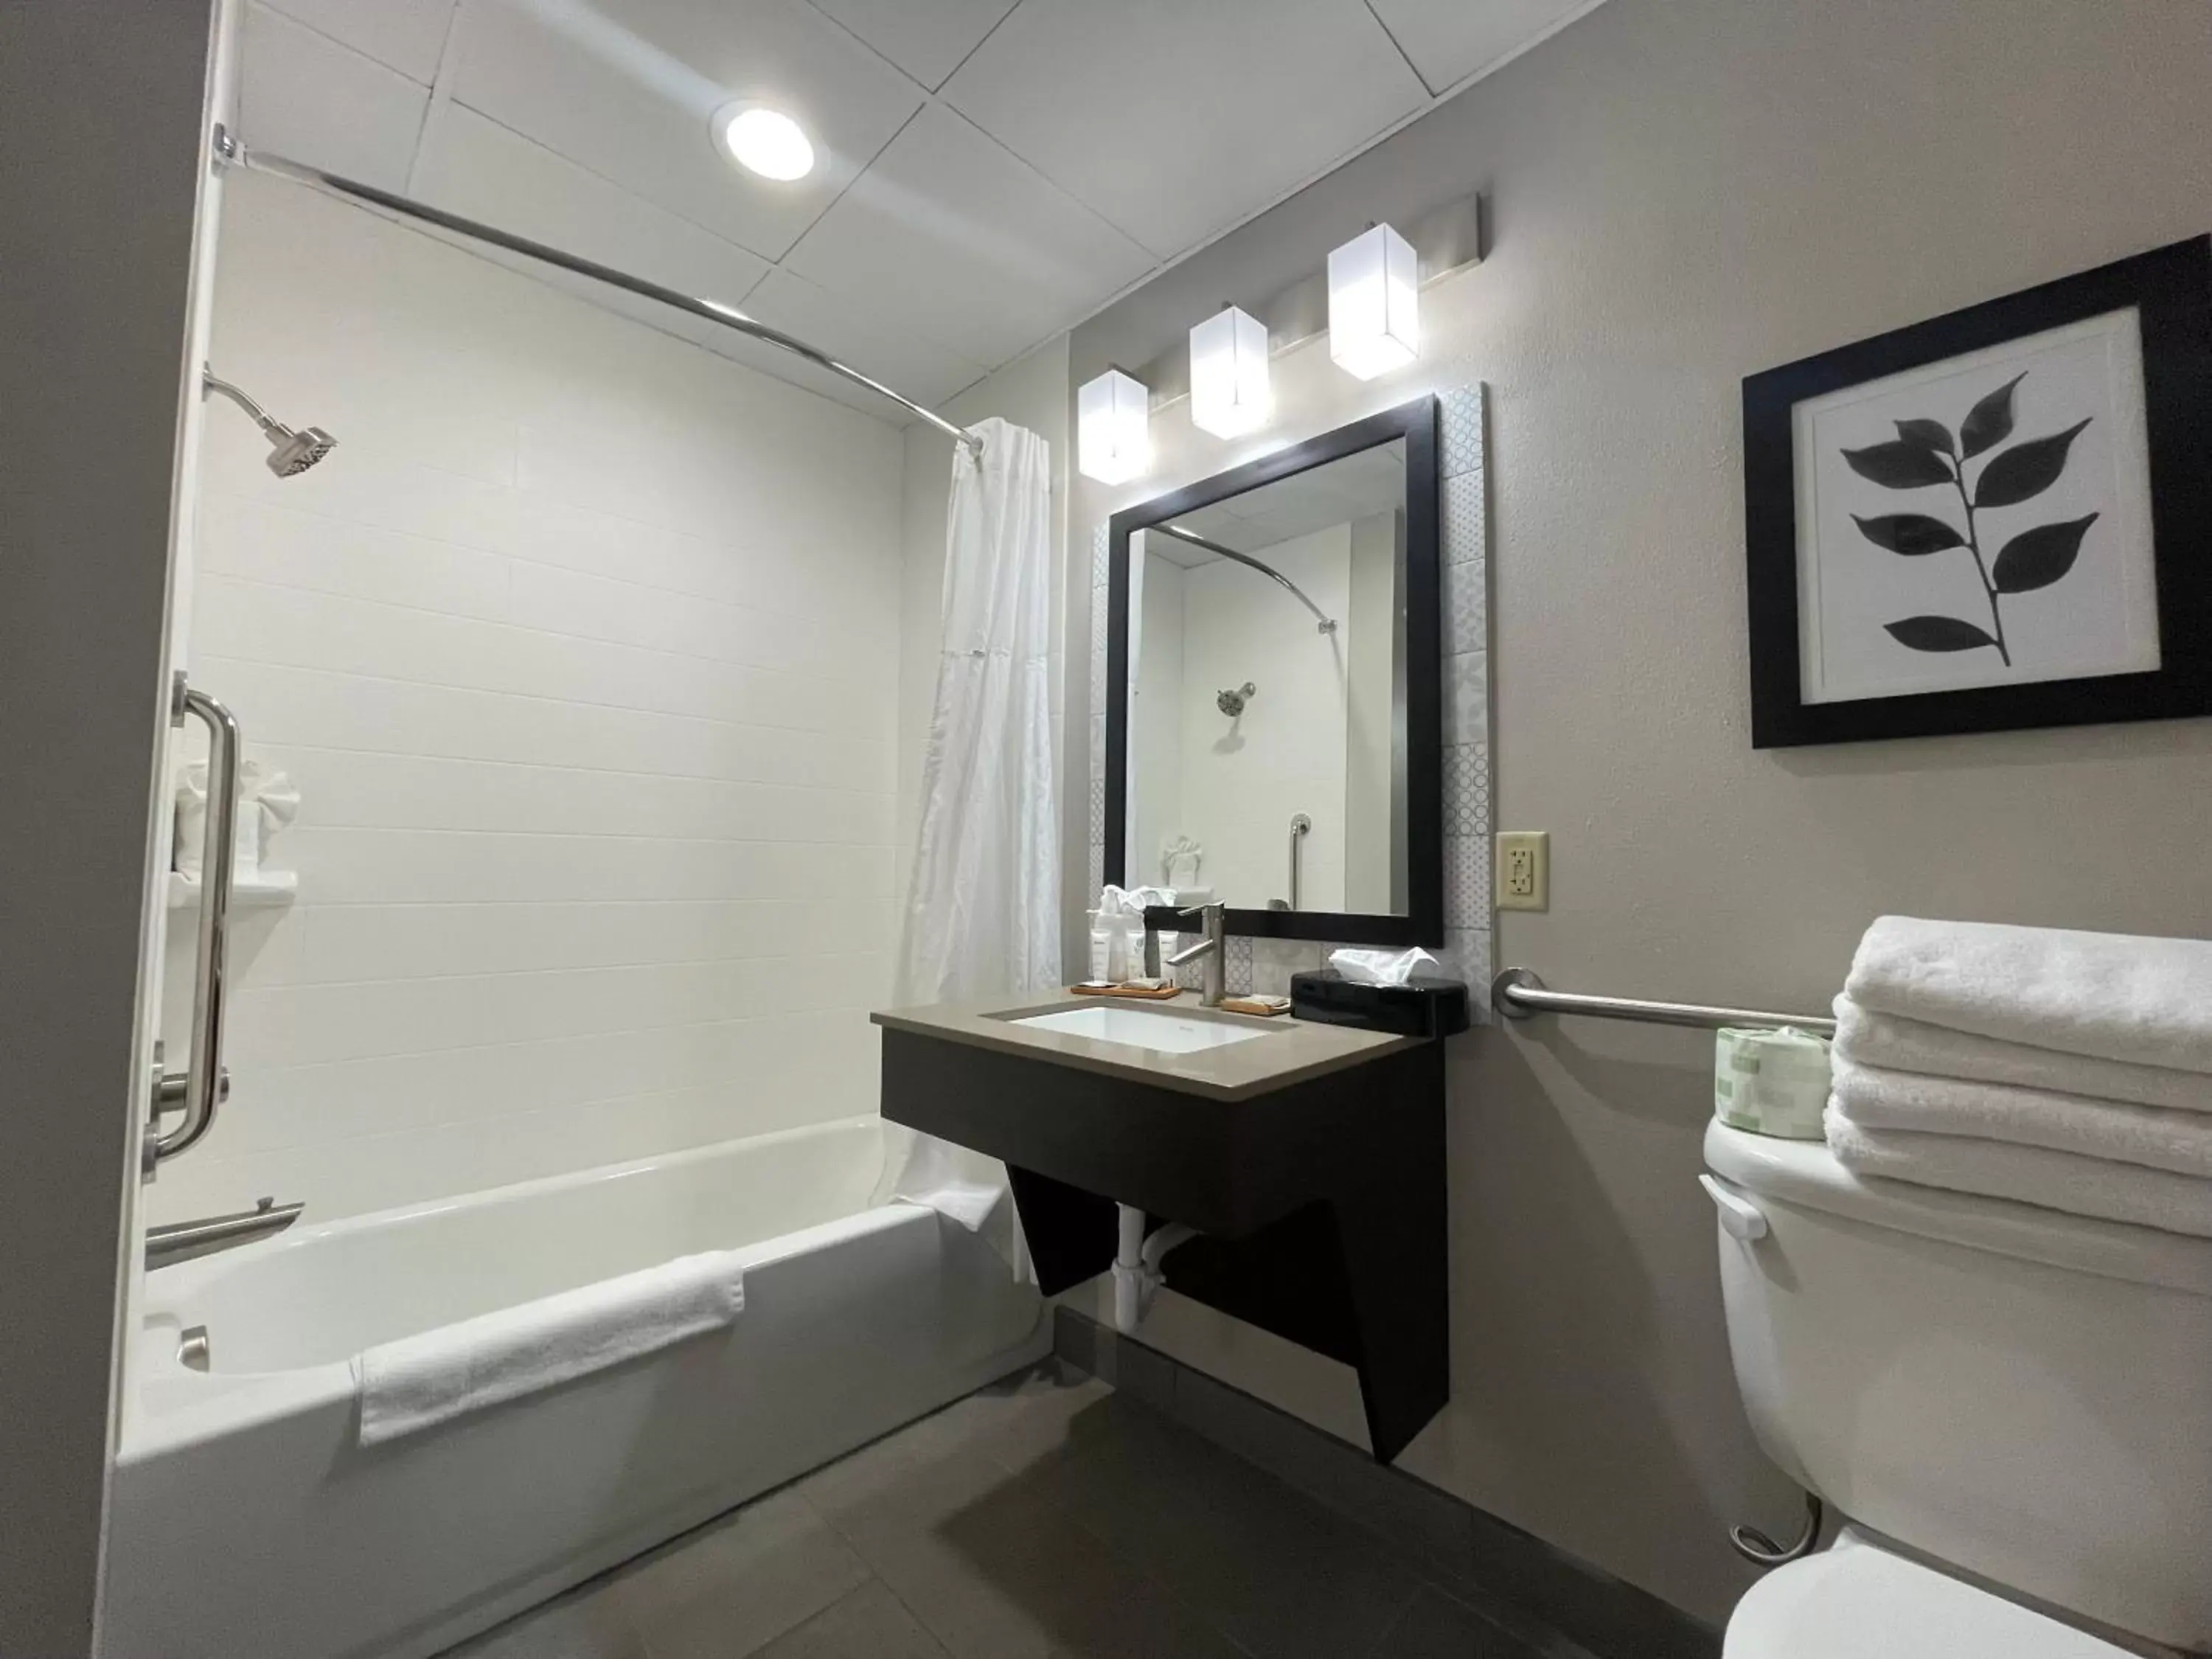 Bathroom in Country Inn & Suites by Radisson, Valdosta, GA - NEWLY RENOVATED